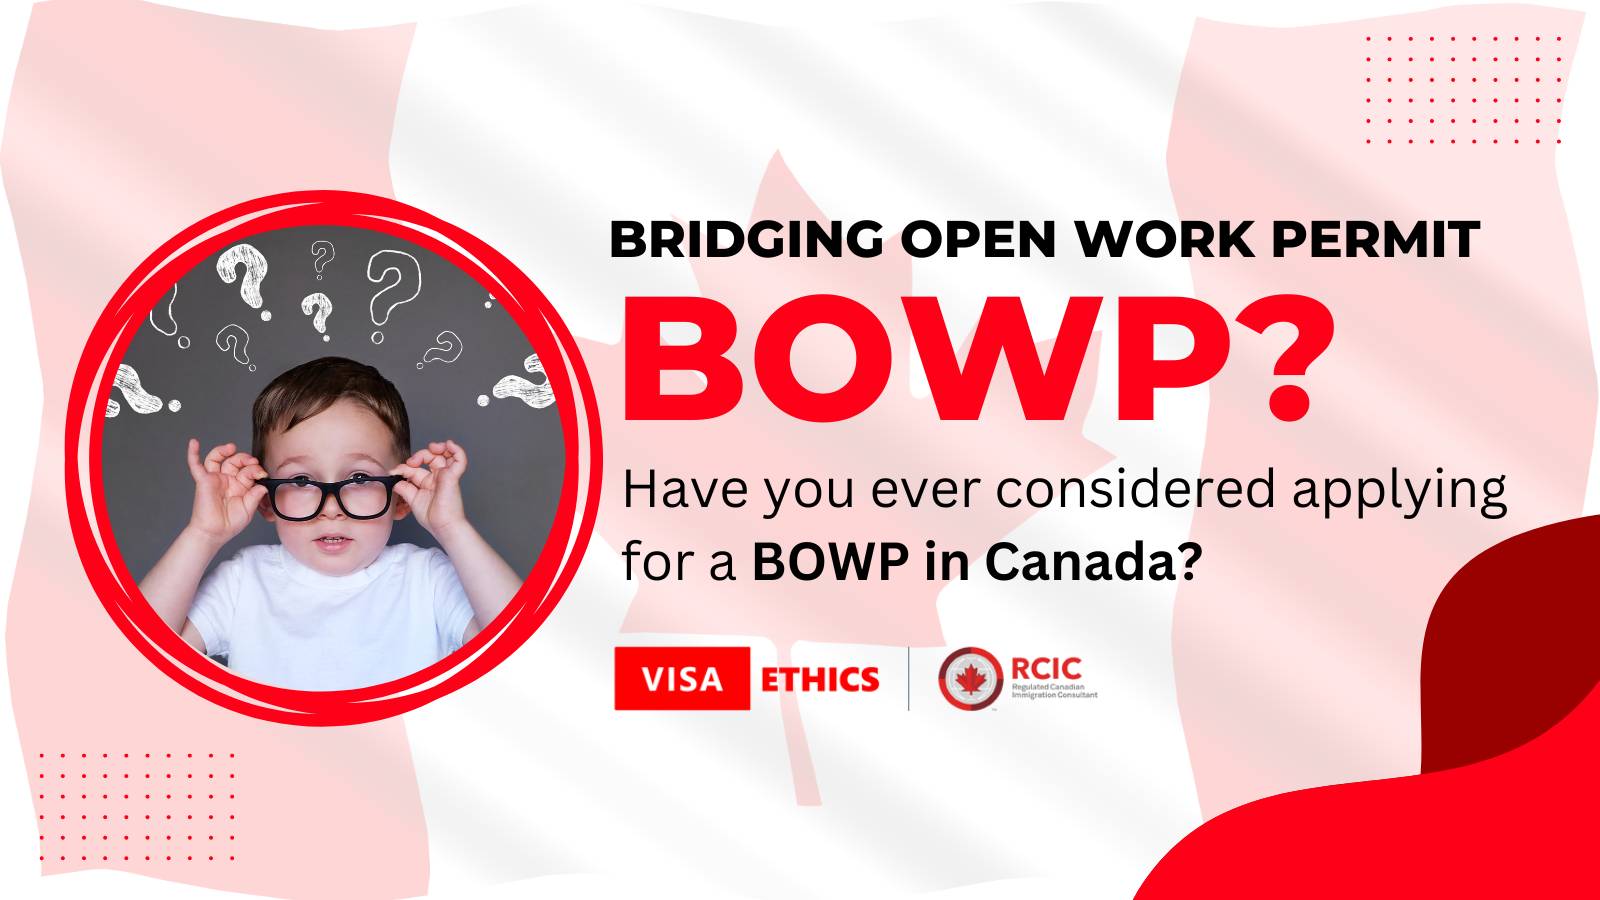 Bridging Open Work Permit - BOWP - Visaethics.com - Visa Ethics Canada